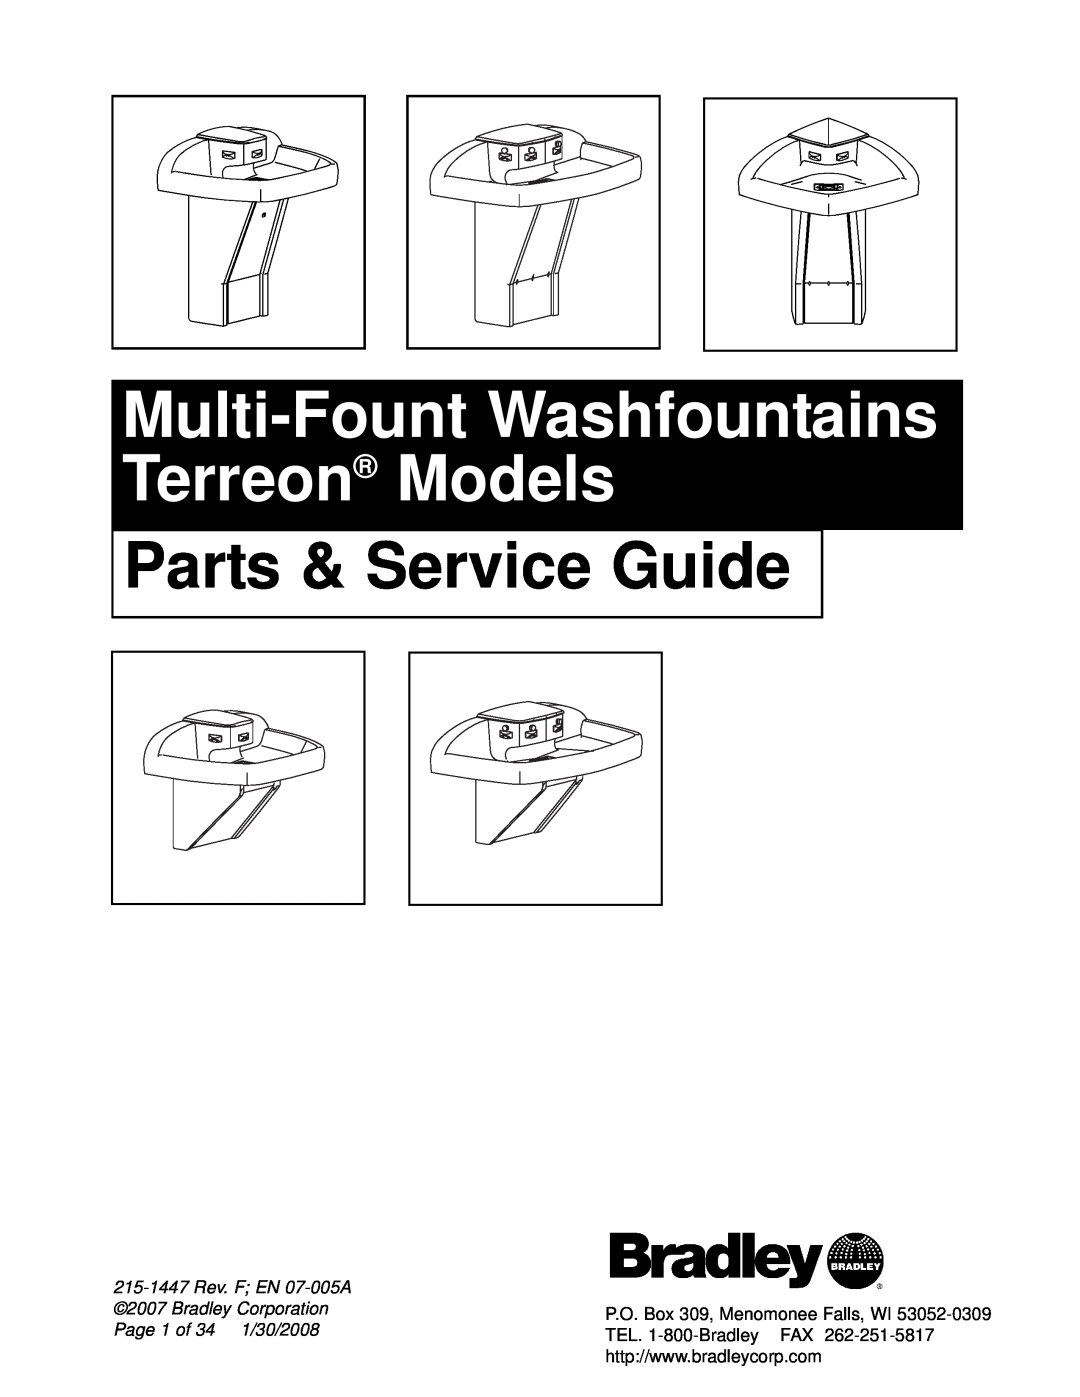 Bradley Smoker Indoor Furnishings manual Multi-FountWashfountains Terreon Models, Parts & Service Guide 